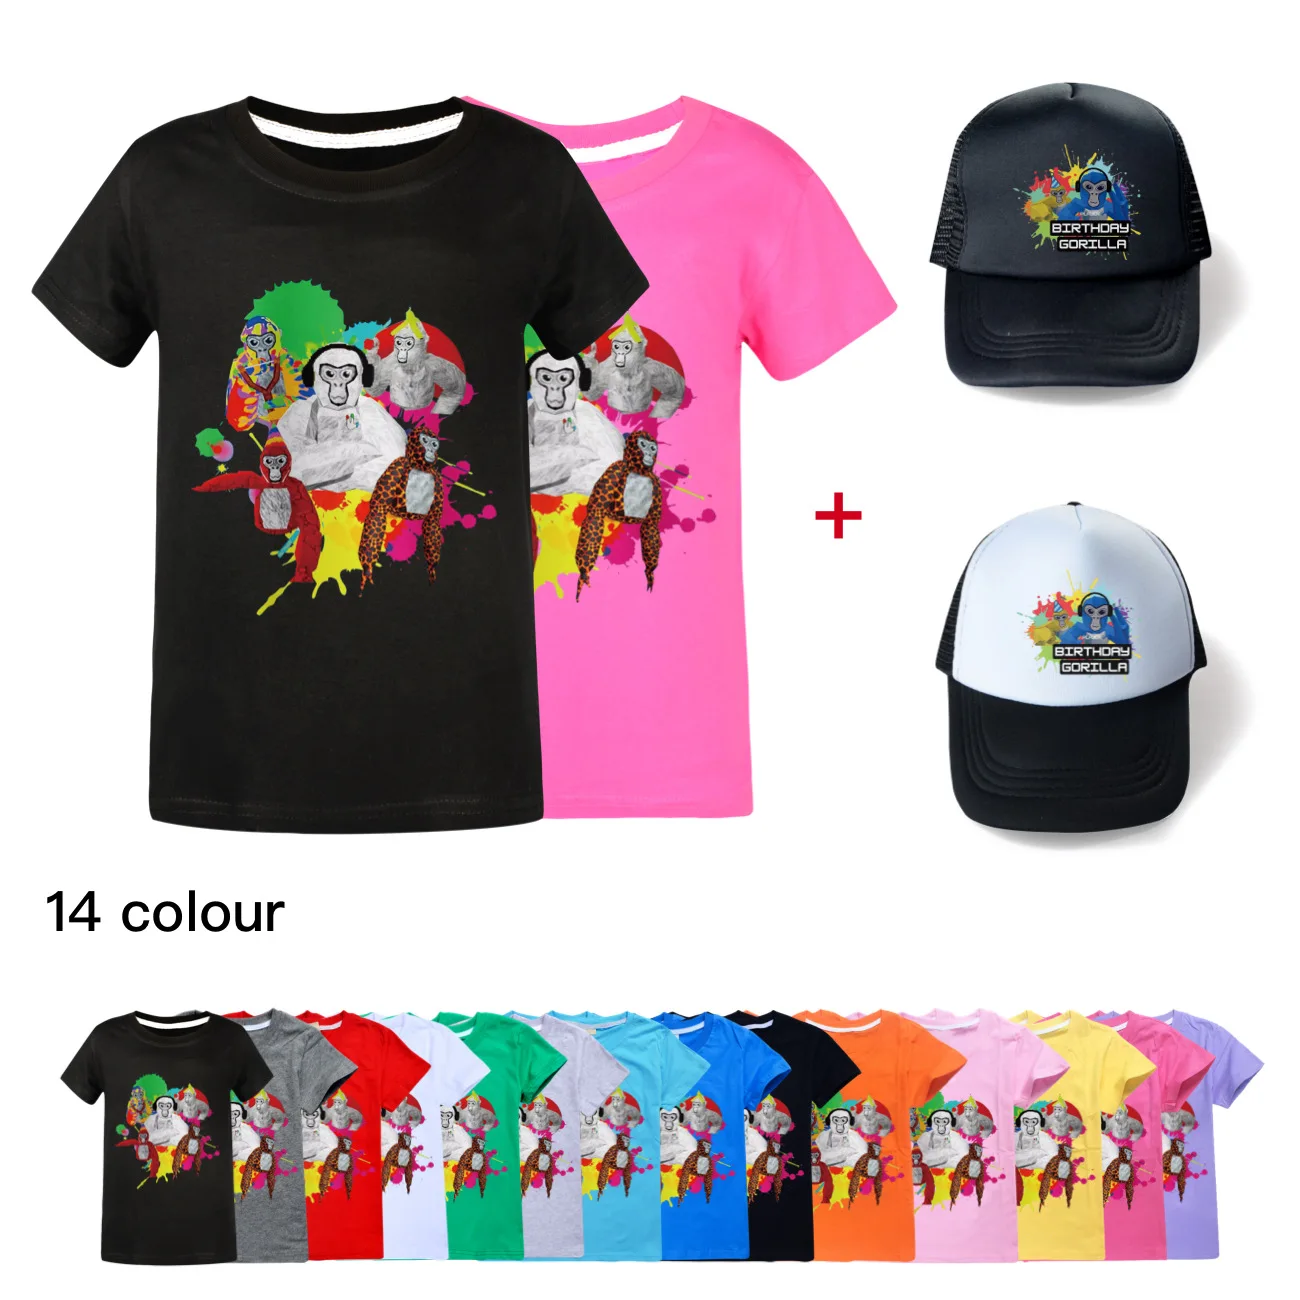 

New Game Gorilla Tag Kids T-shirt Summer Children Cartoon Game T Shirt Toddler Baby Short Sleeves Tshirt & Baseball Cap Hat